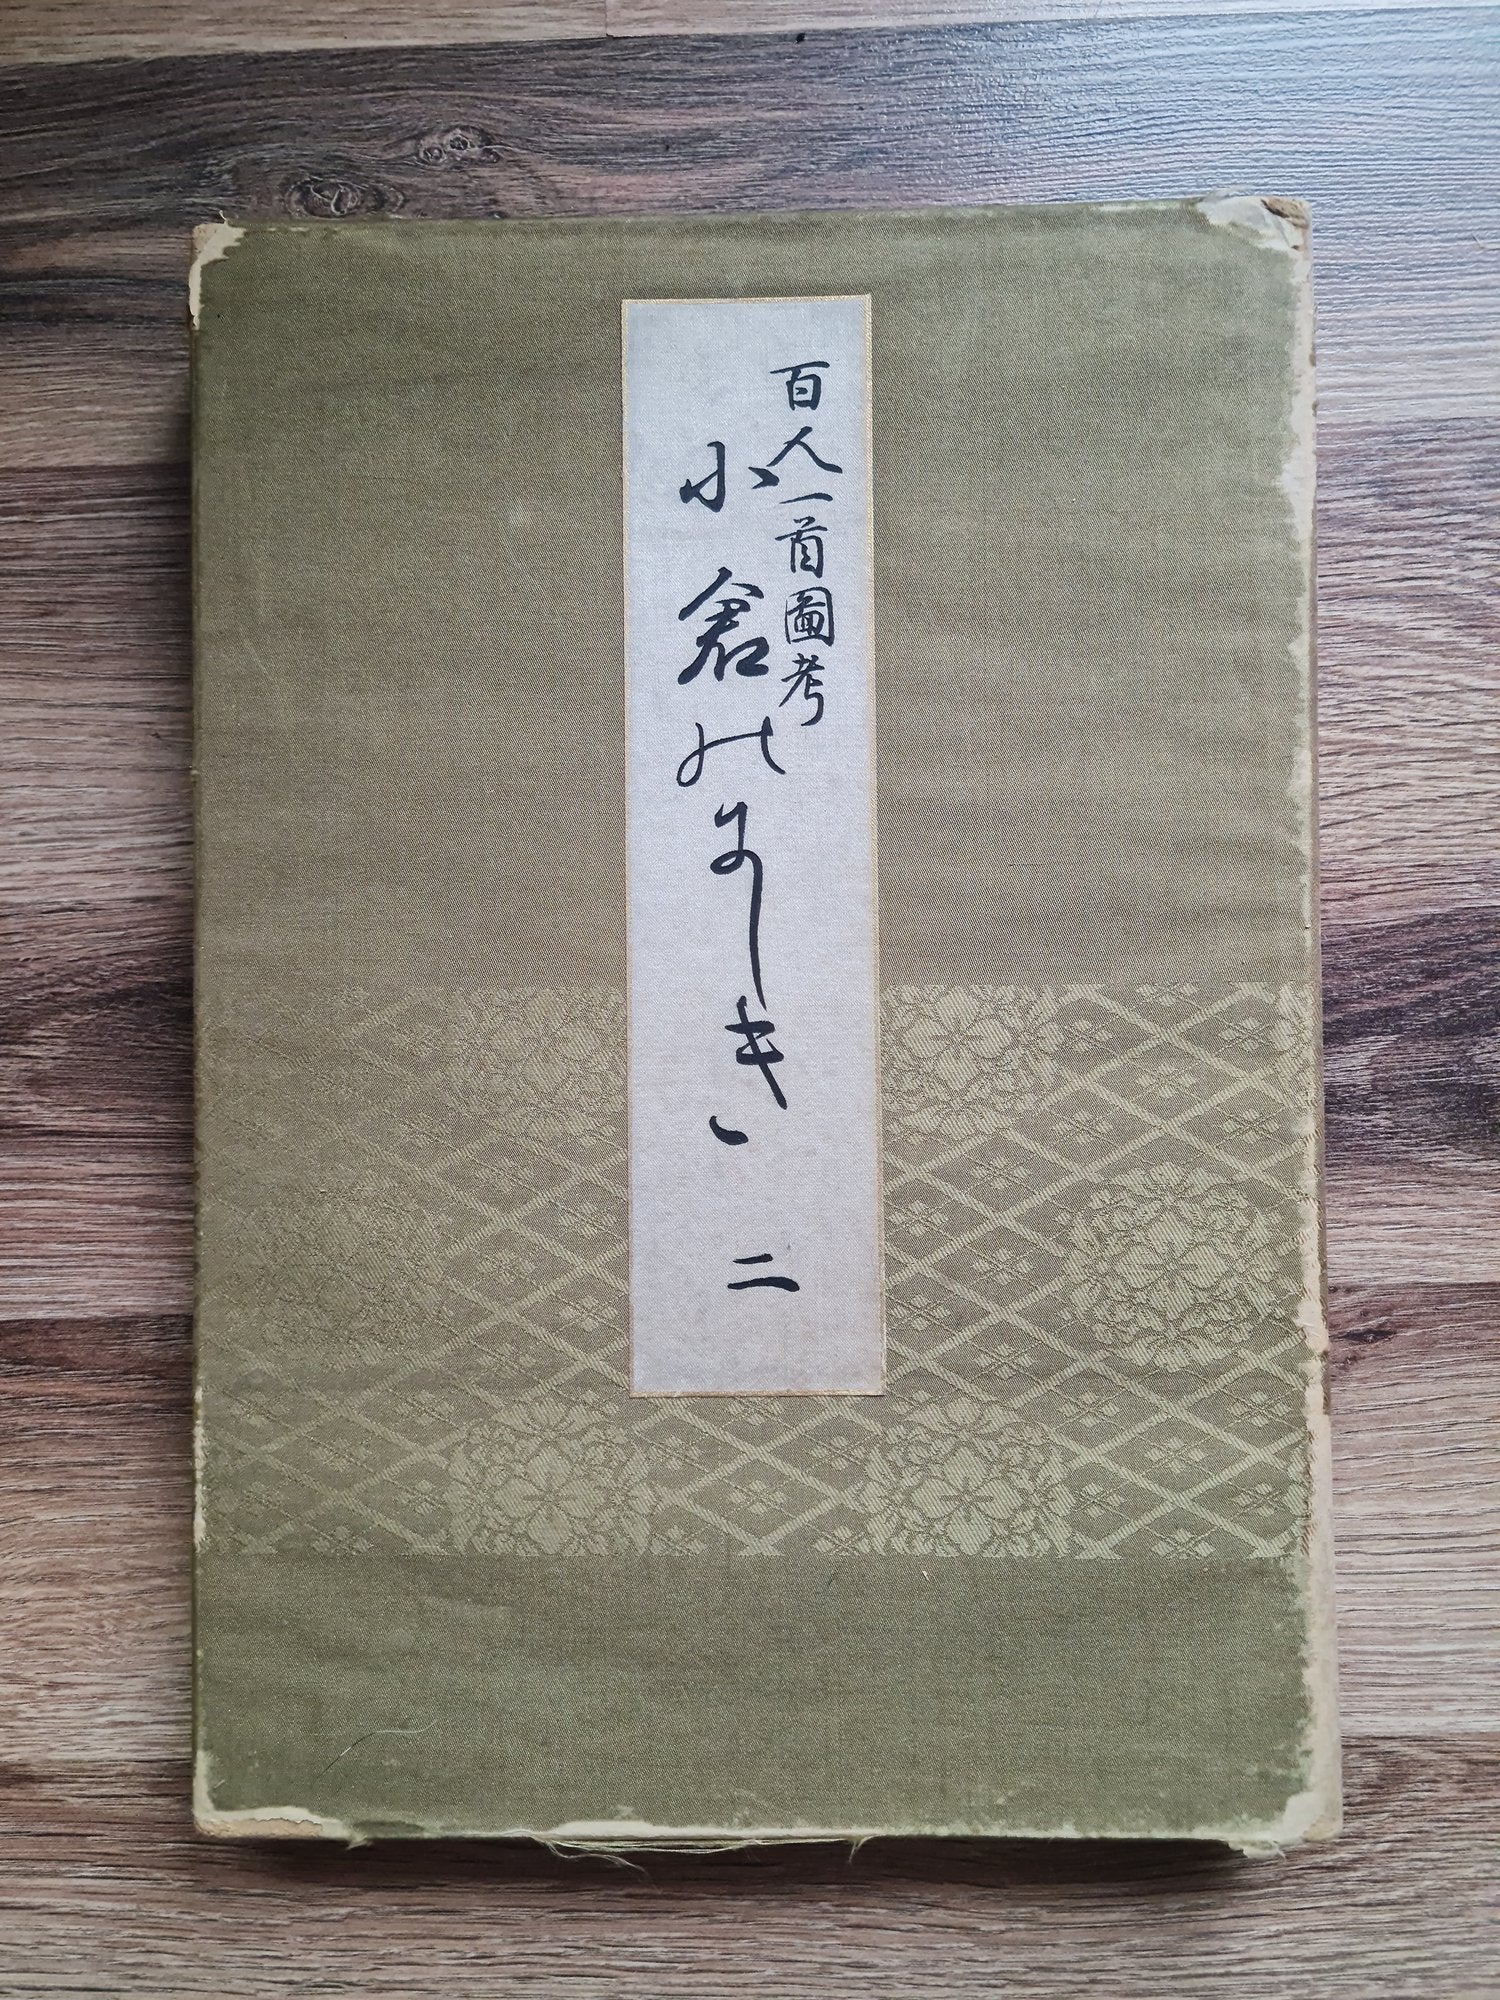 'Hyakunin Isshu zukō ogura no nishiki' 百人一首図考 小倉のにしき volume 2 - 1935 /  Shikō Iida 飯田始晃